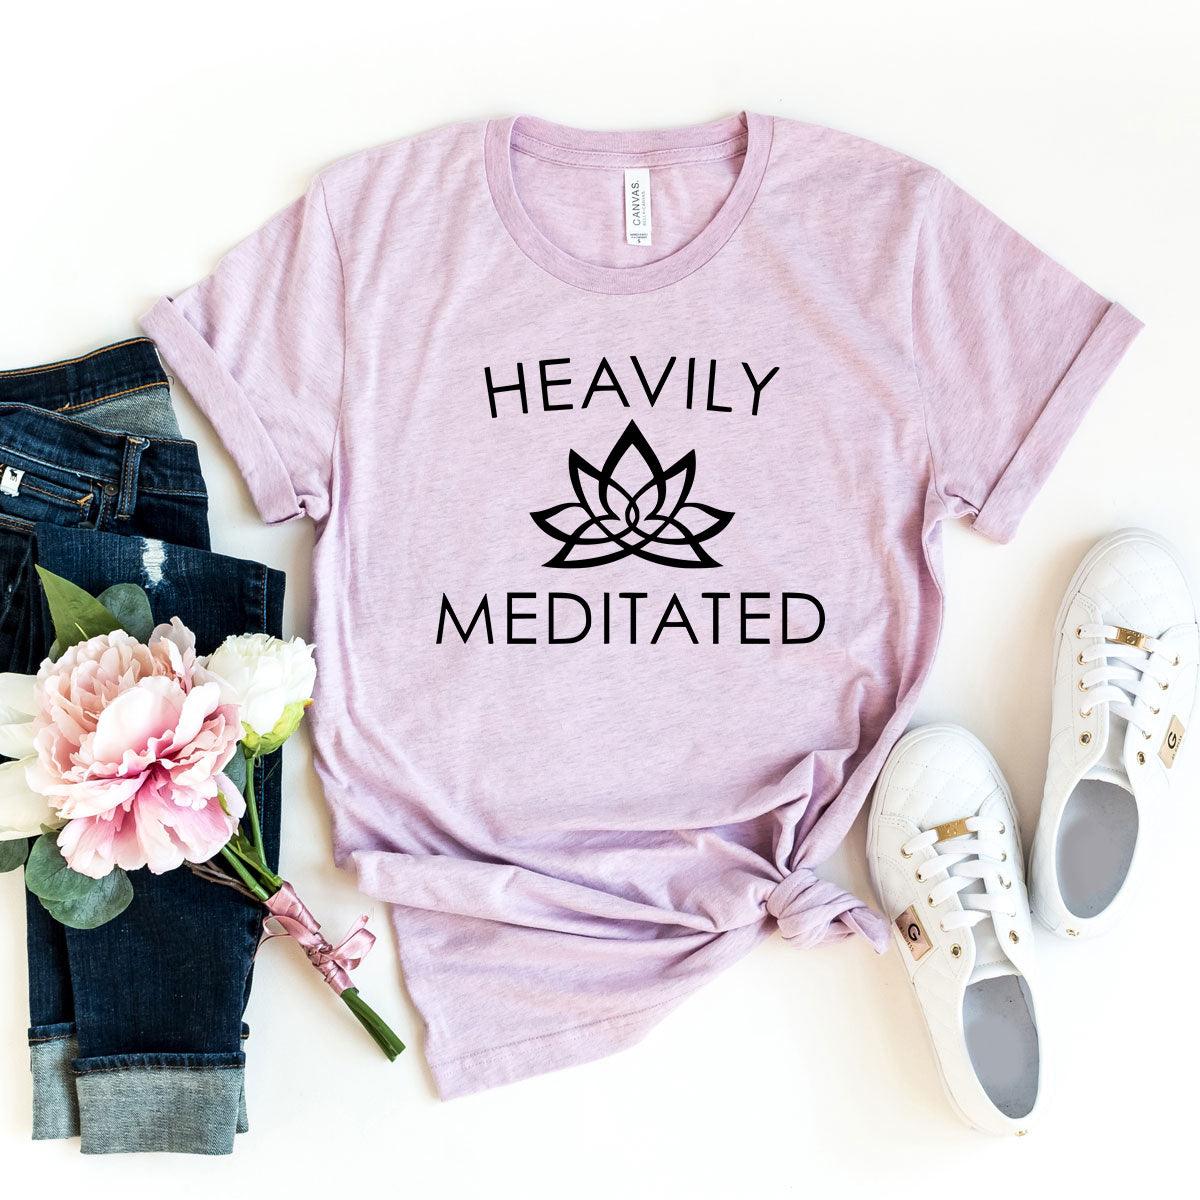 Heavily Meditated Shirt - VirtuousWares:Global